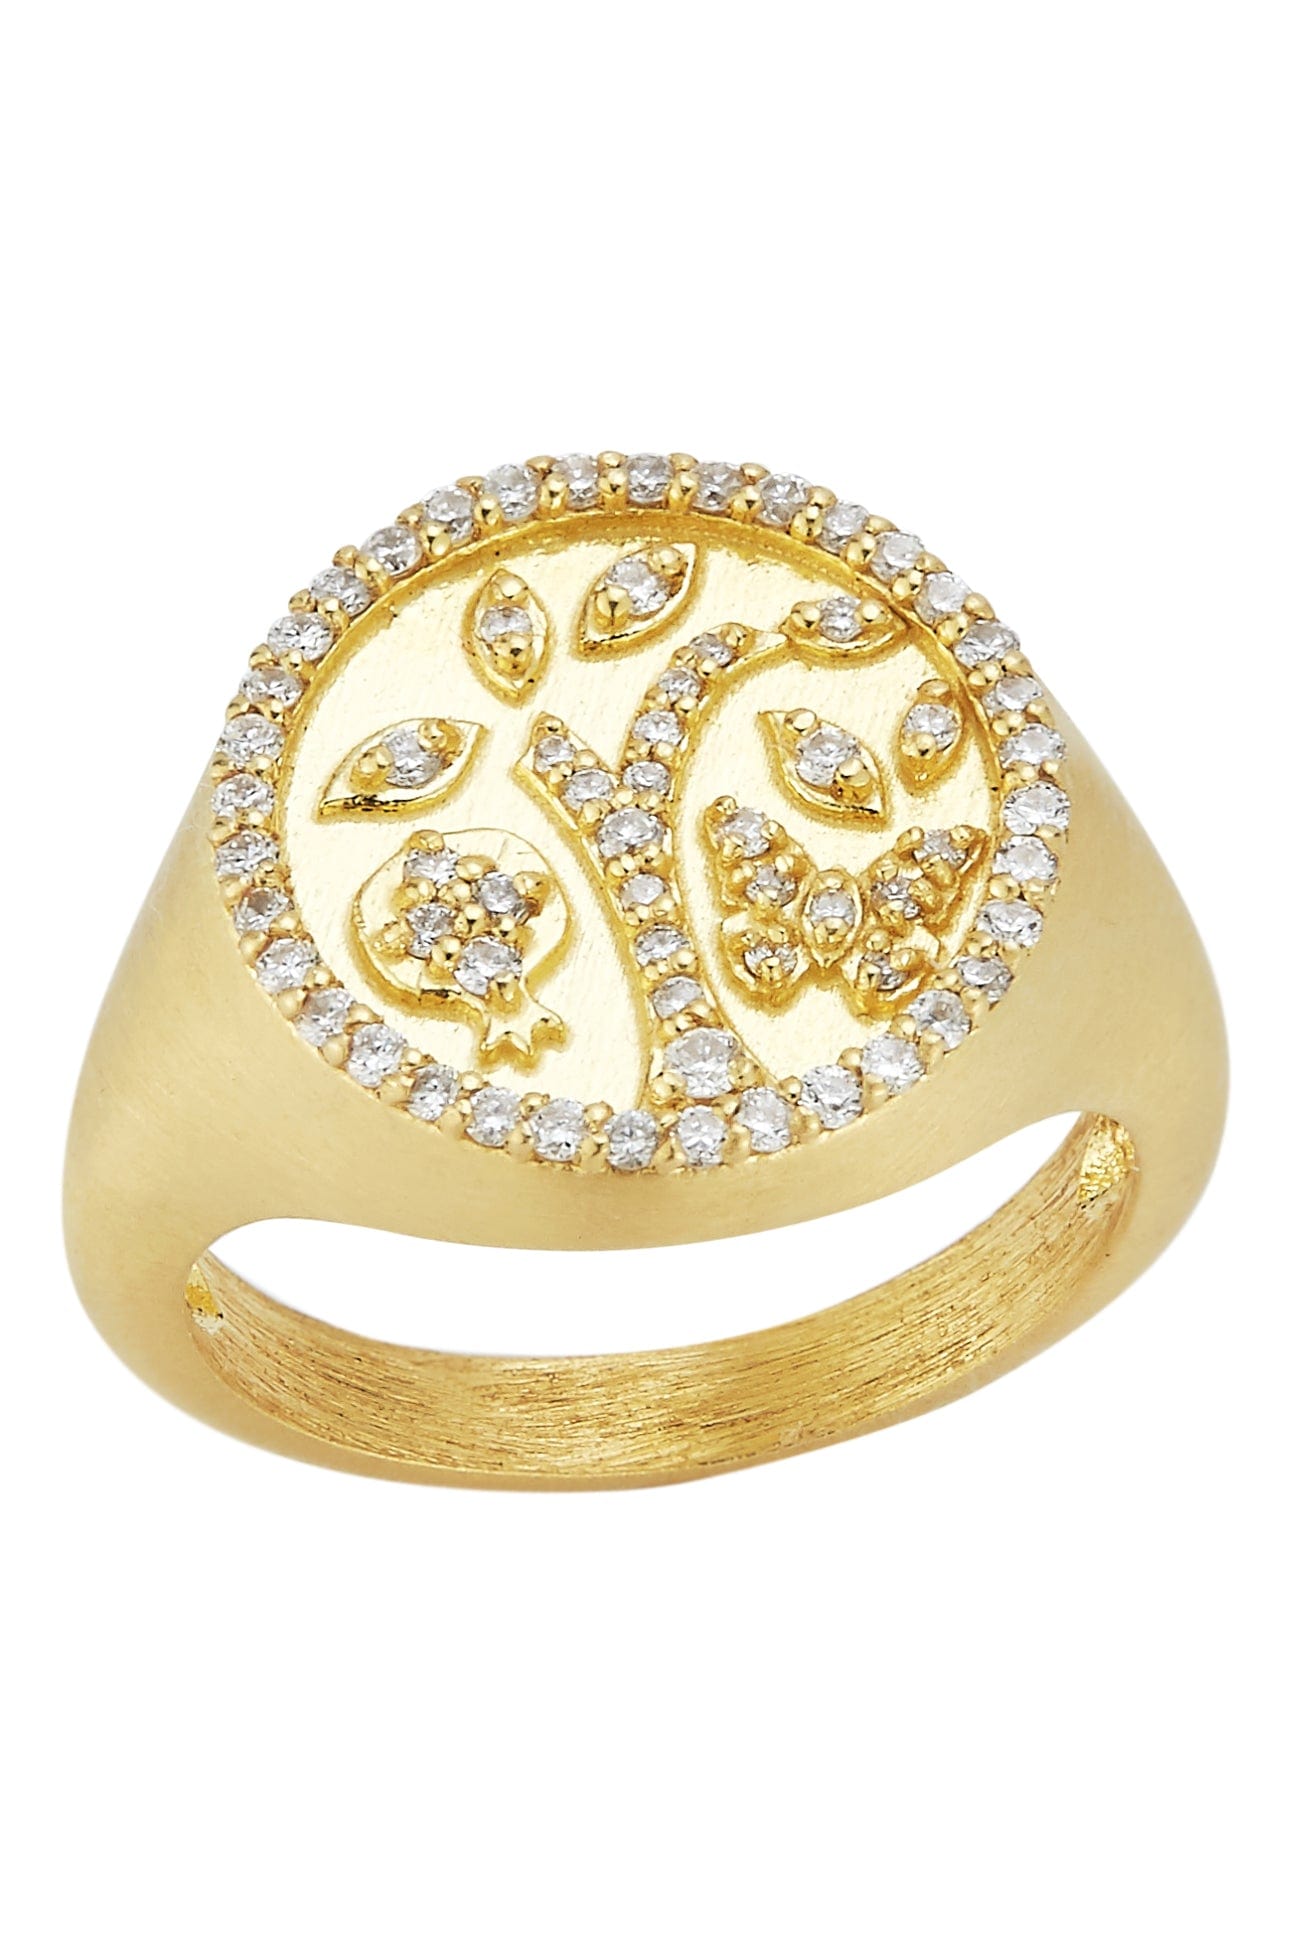 TANYA FARAH-Tree of Life Signet Ring-YELLOW GOLD